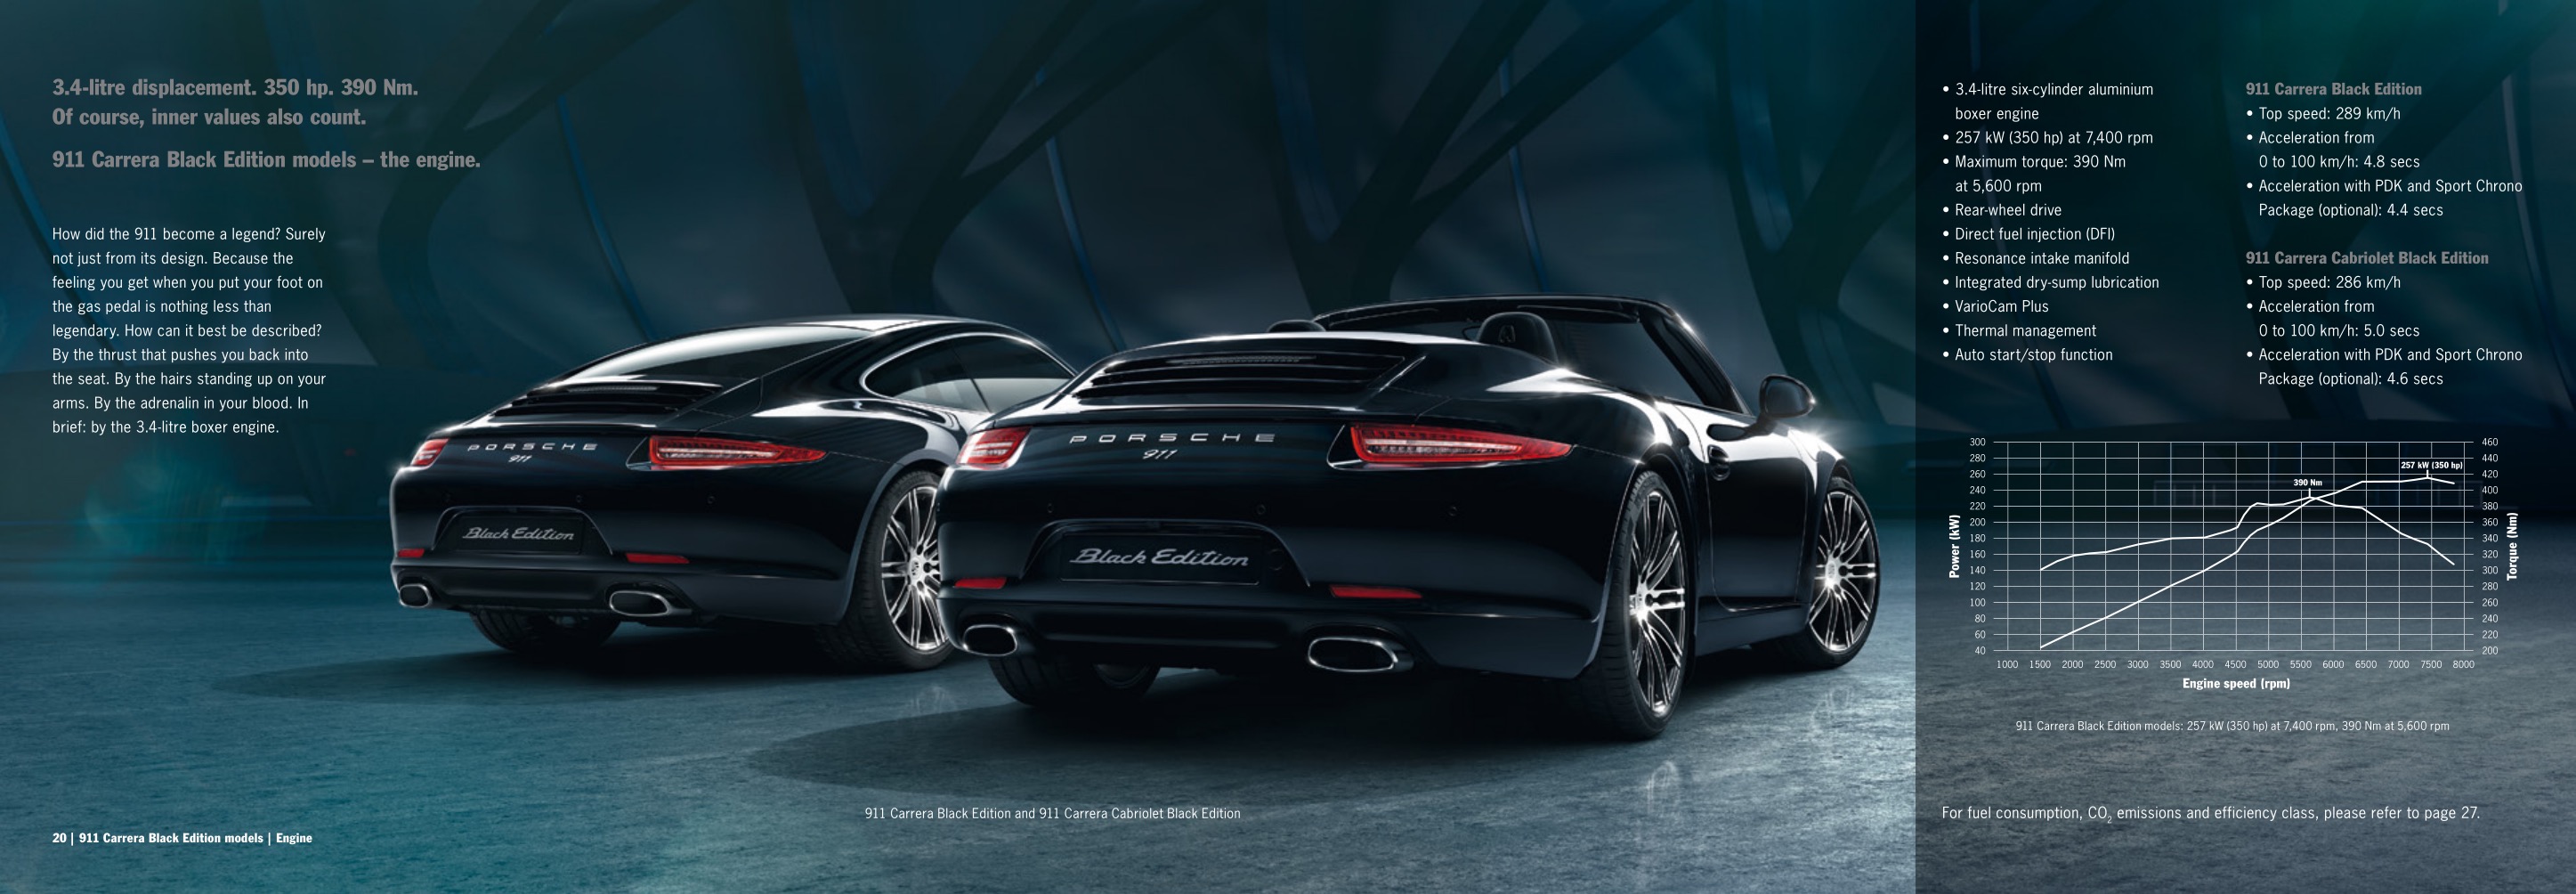 2015 Porsche Black Edition Brochure Page 8